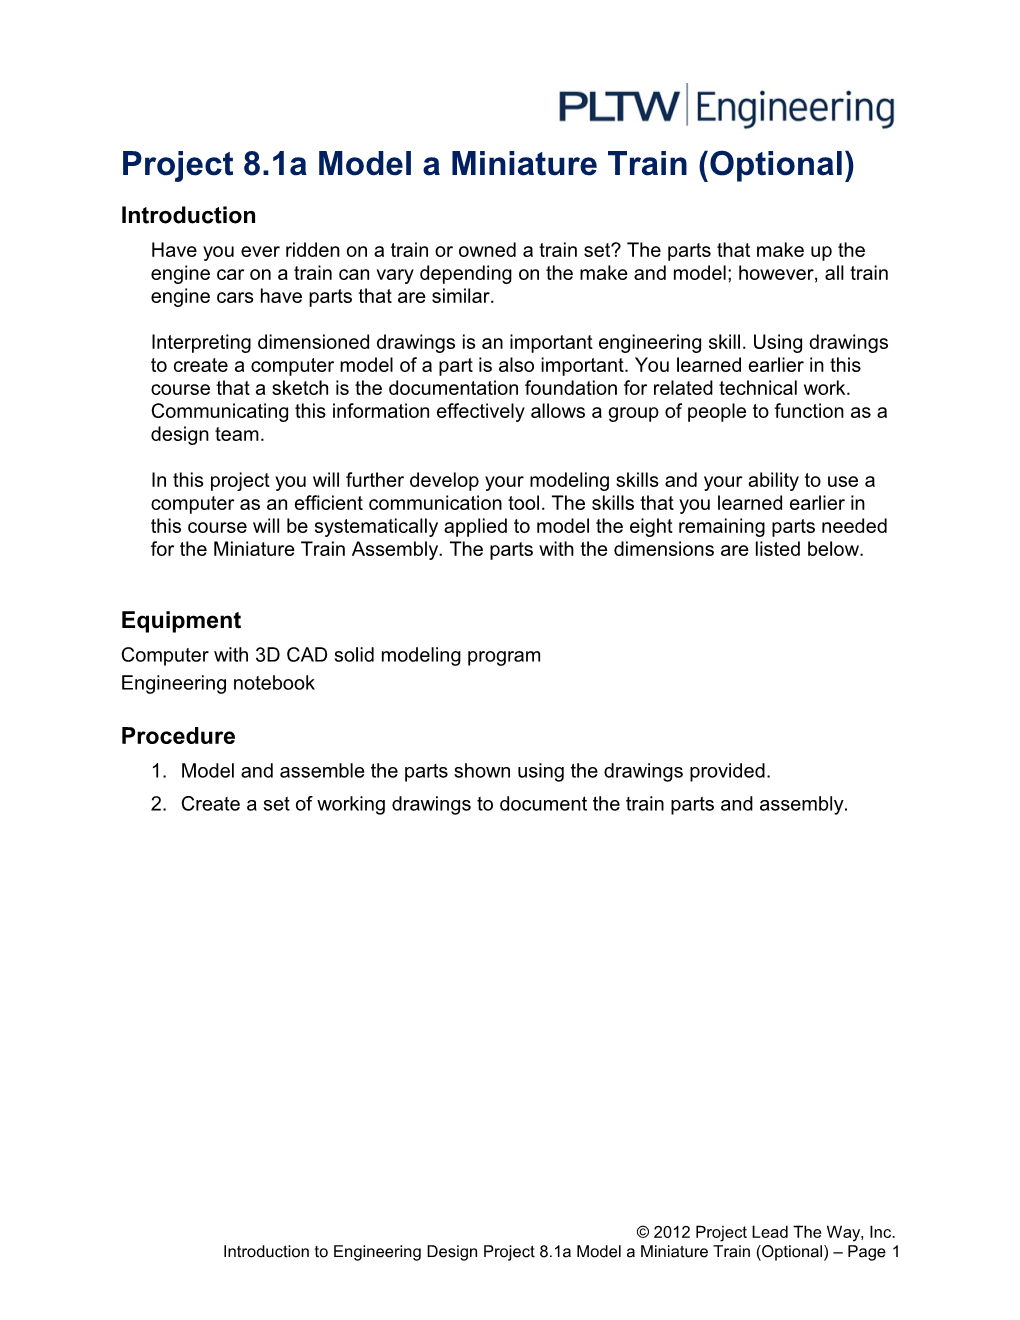 Project 8.1A Model a Miniature Train (Optional) s1